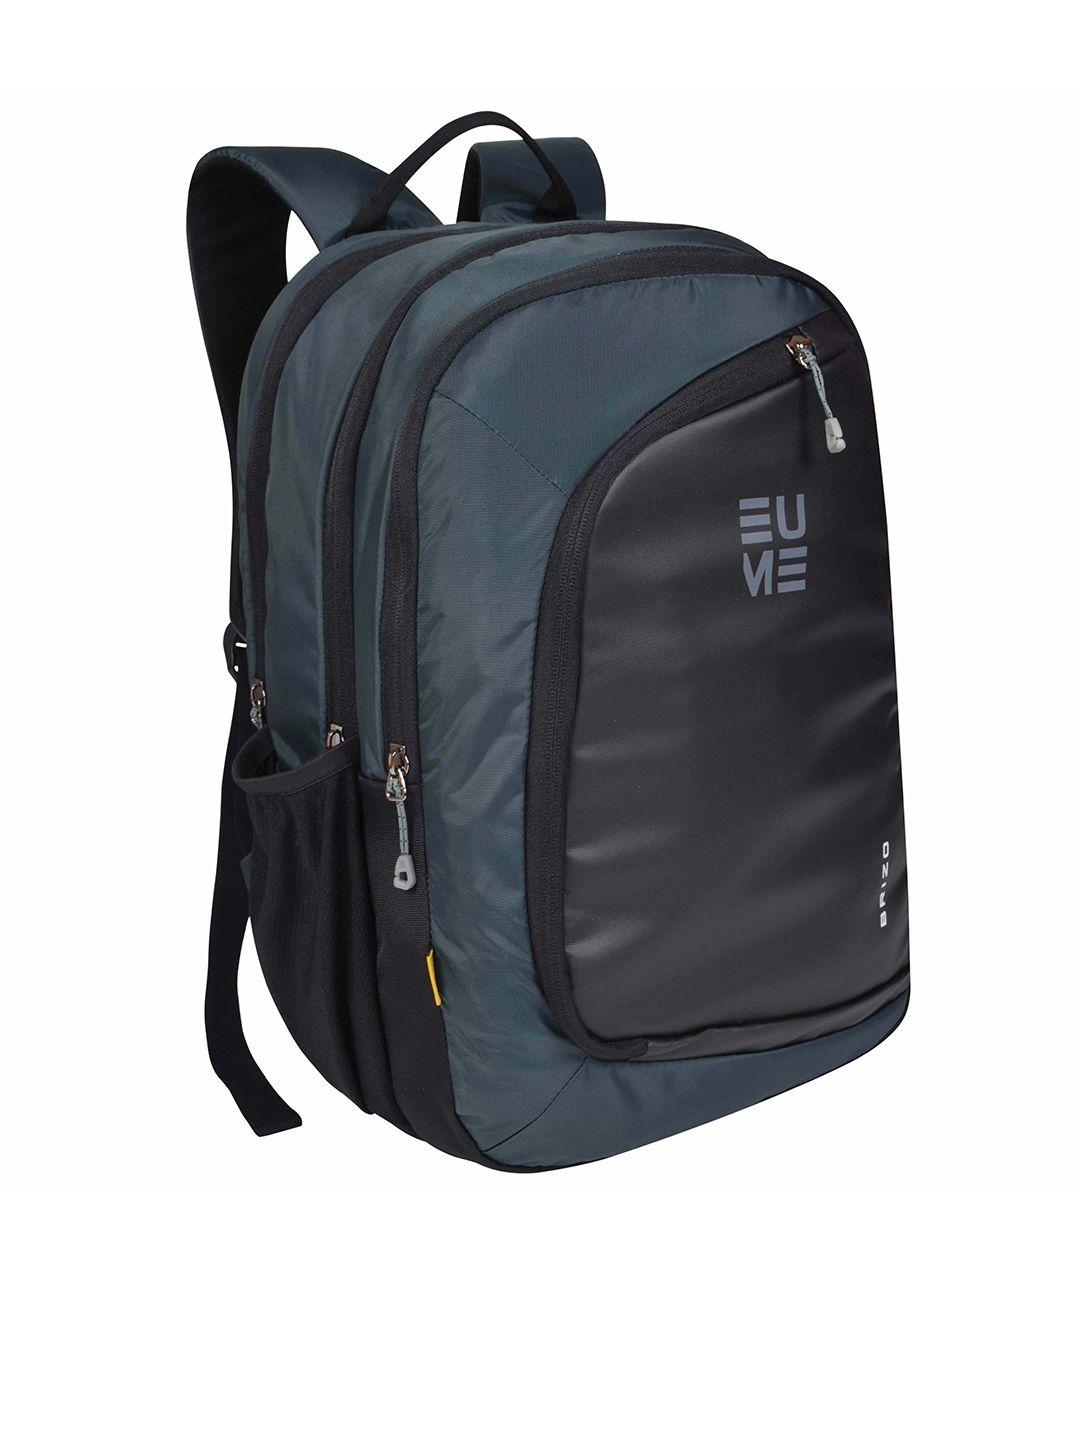 eume unisex grey & black solid nylon backpack